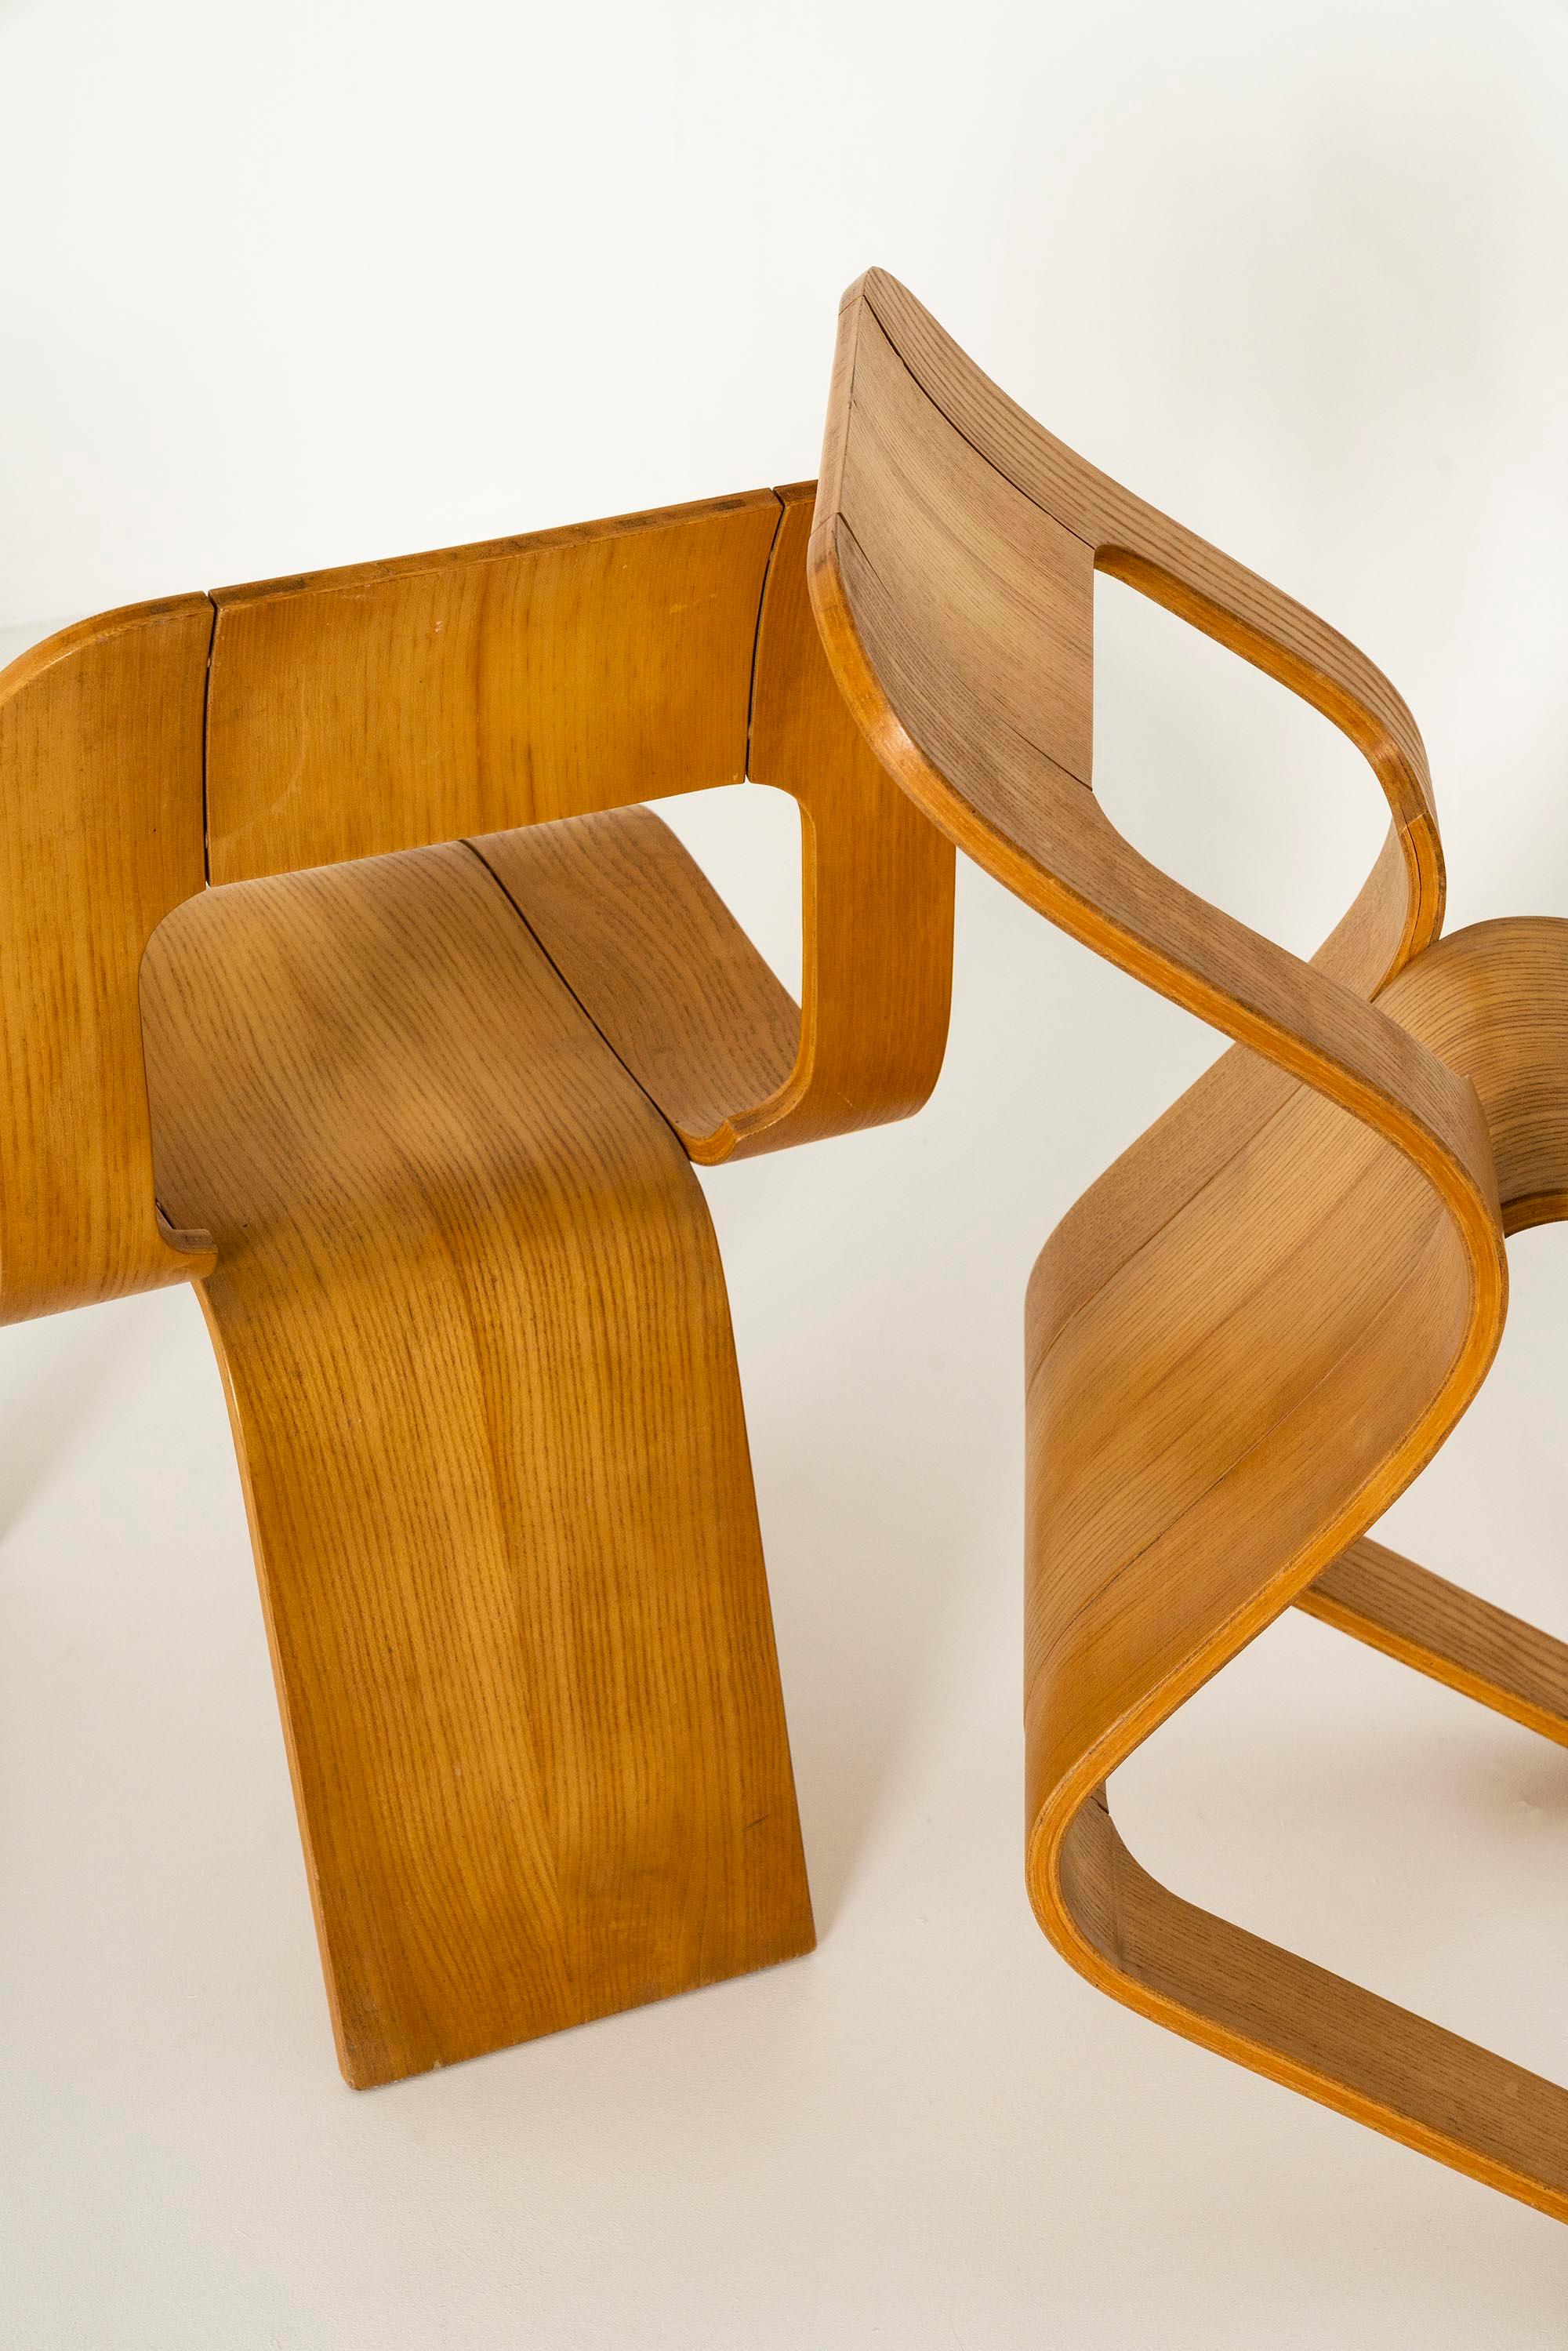 Veneer Gigi Sabadin, Set of Four Stackable Chairs for Stilwood, Italy, ca 1973